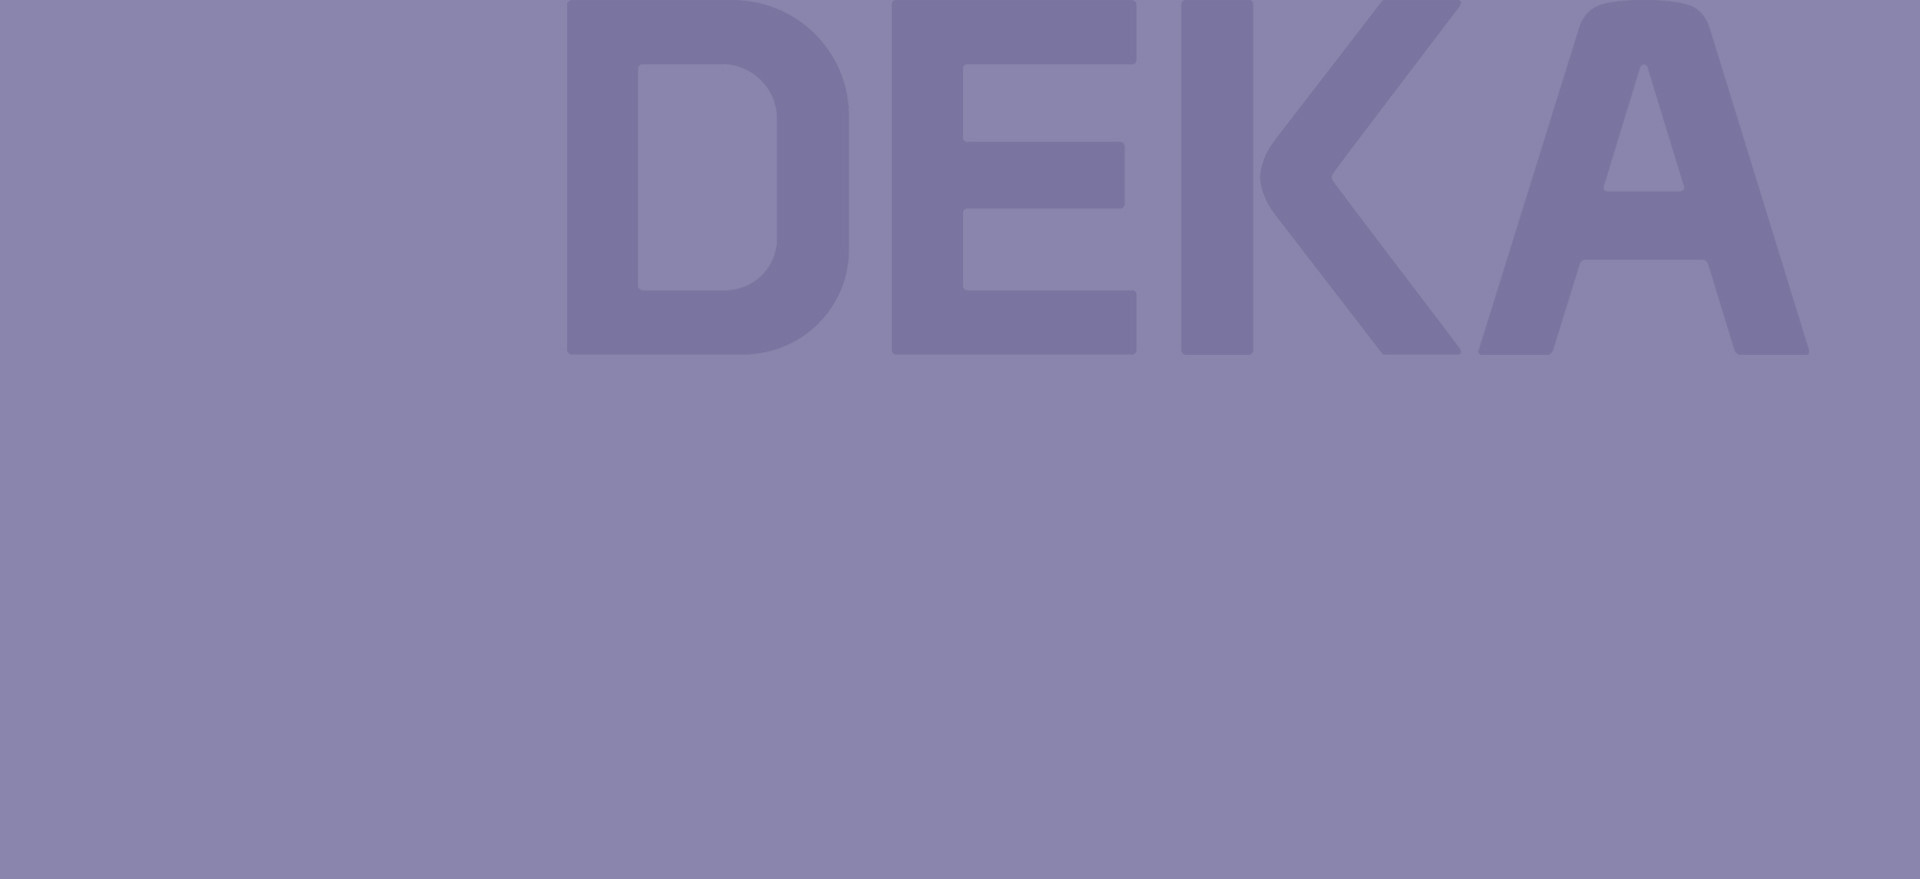 DEKA_banner